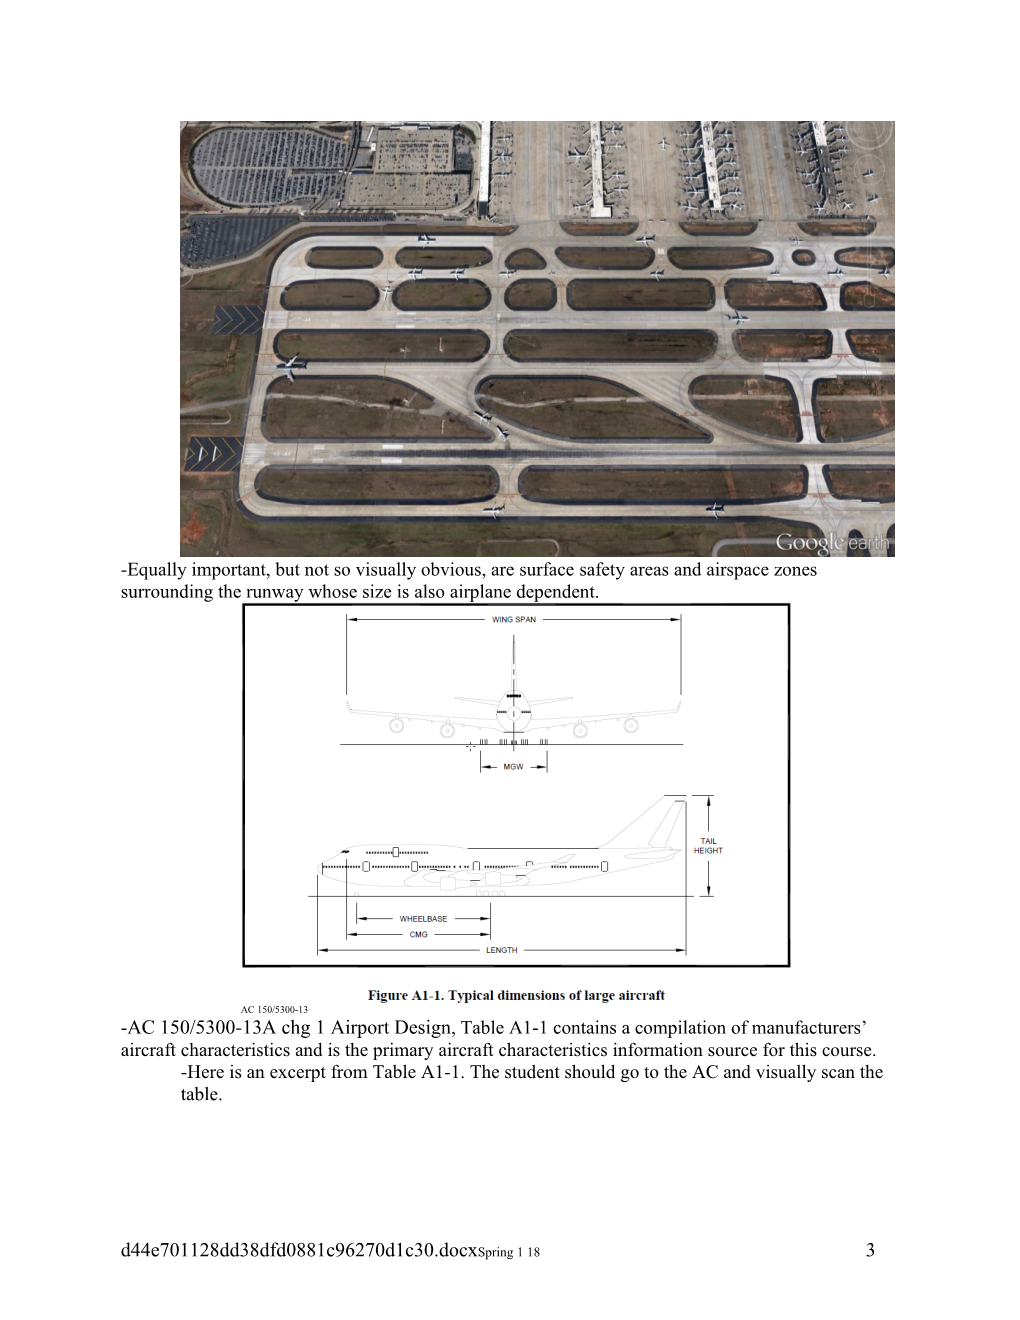 4 Aircraft Characteristicsdriving Airport Design